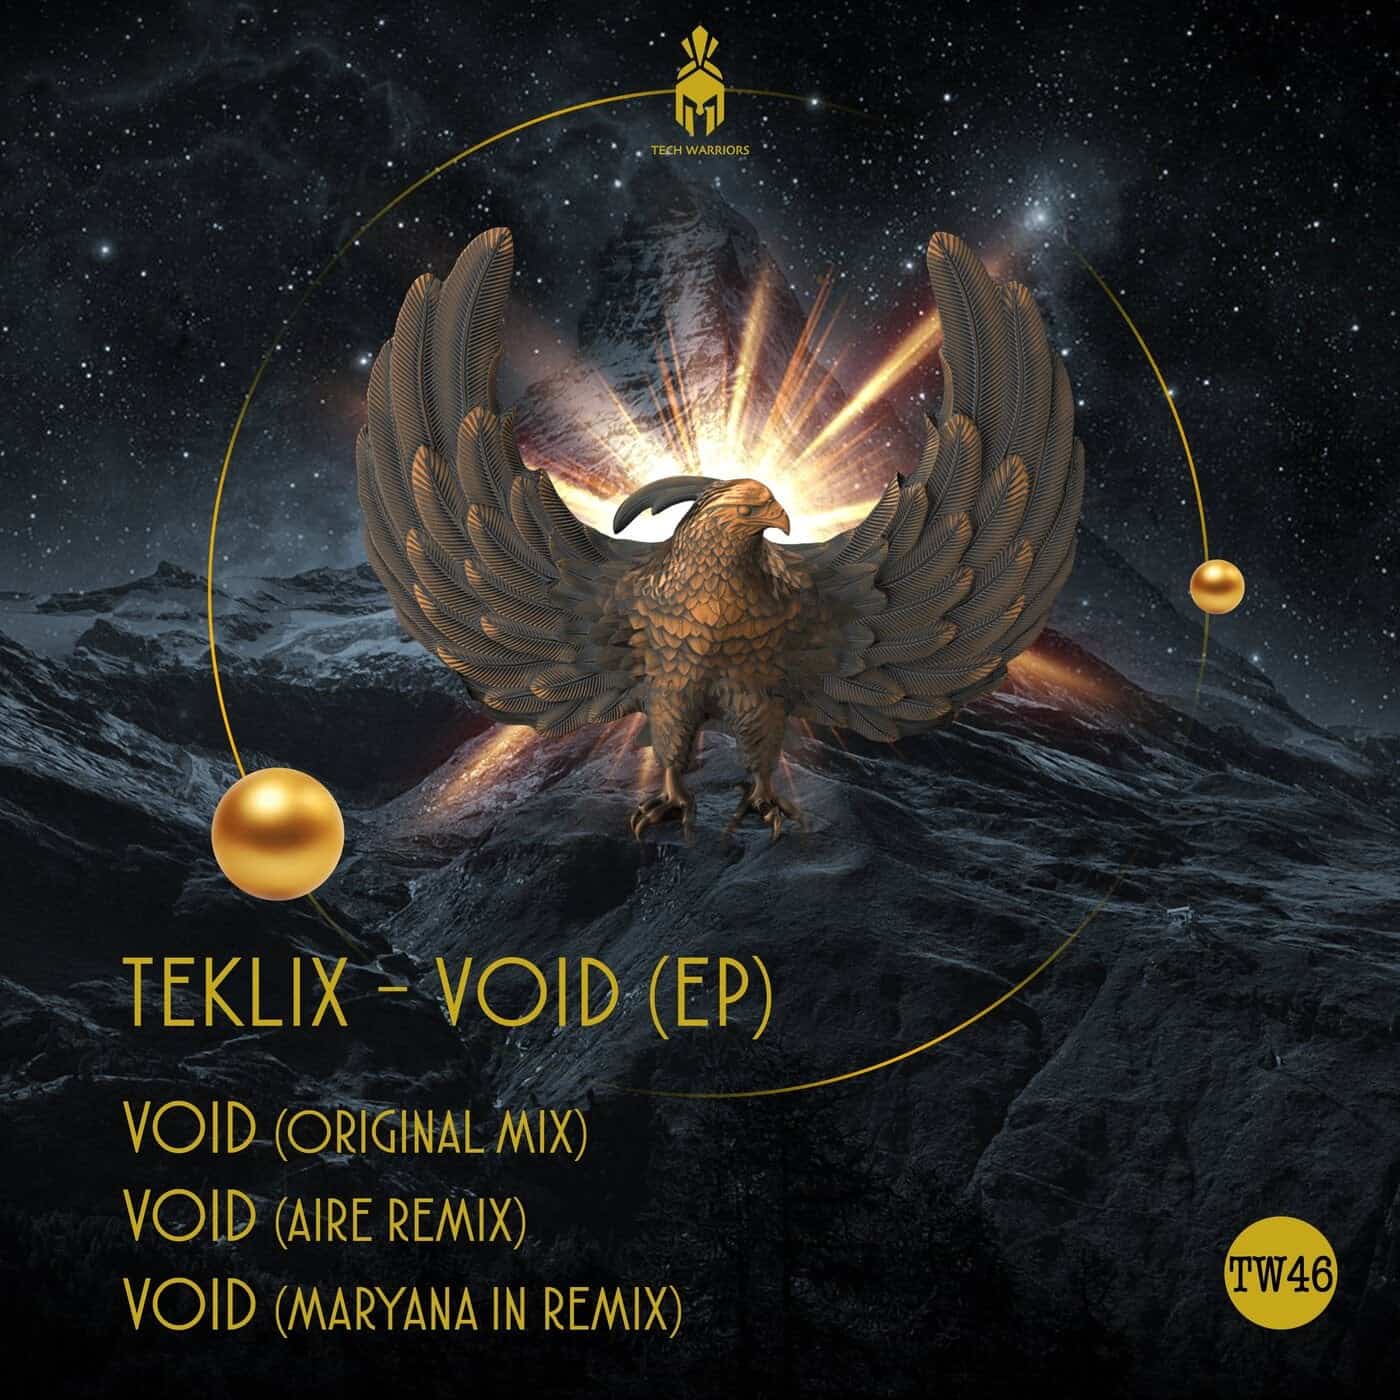 Download Teklix - Void on Electrobuzz